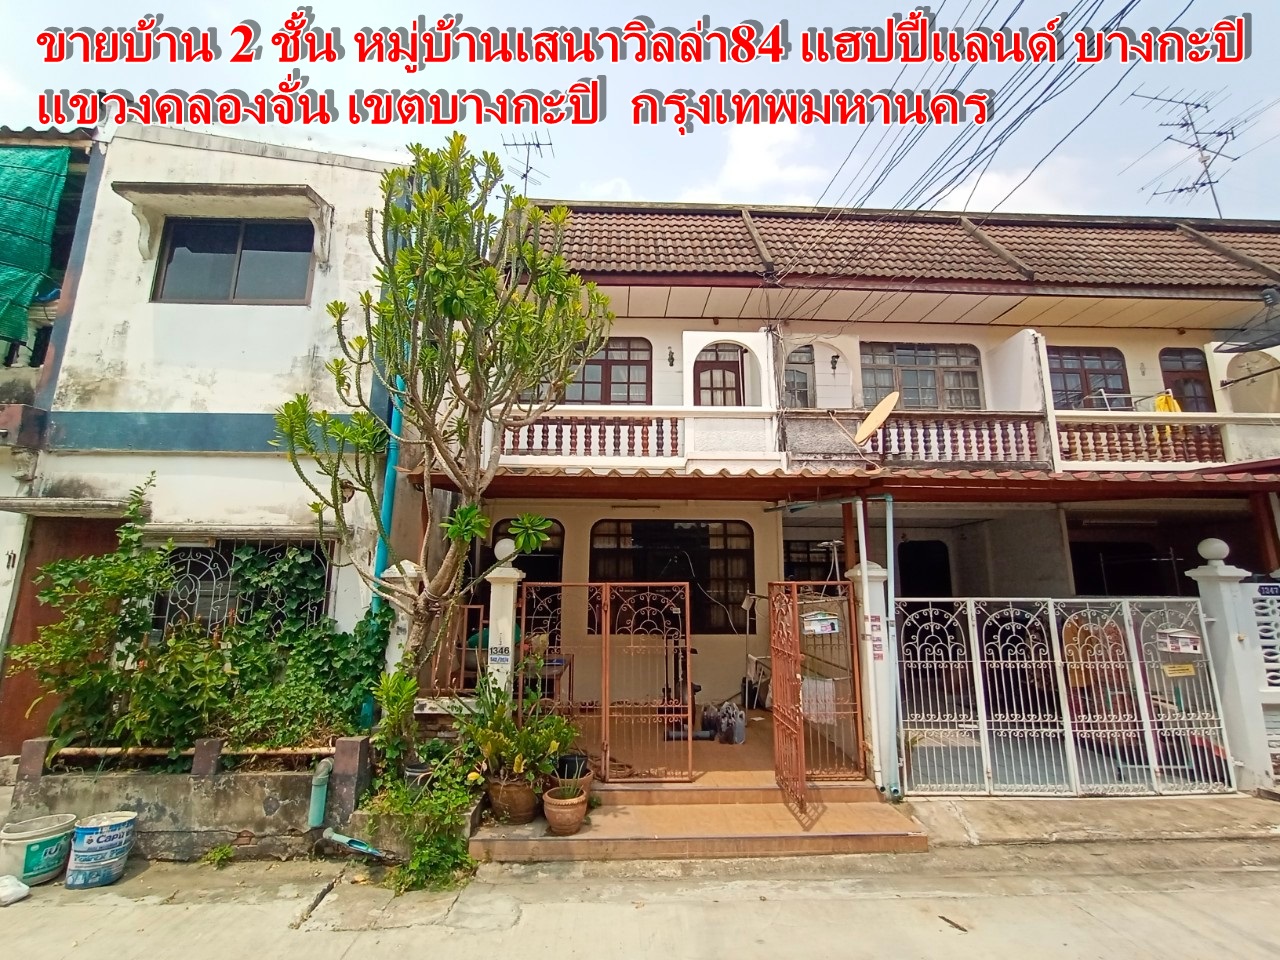 2-storey house for sale, Sena Villa 84 Village, Happyland, Bangkapi